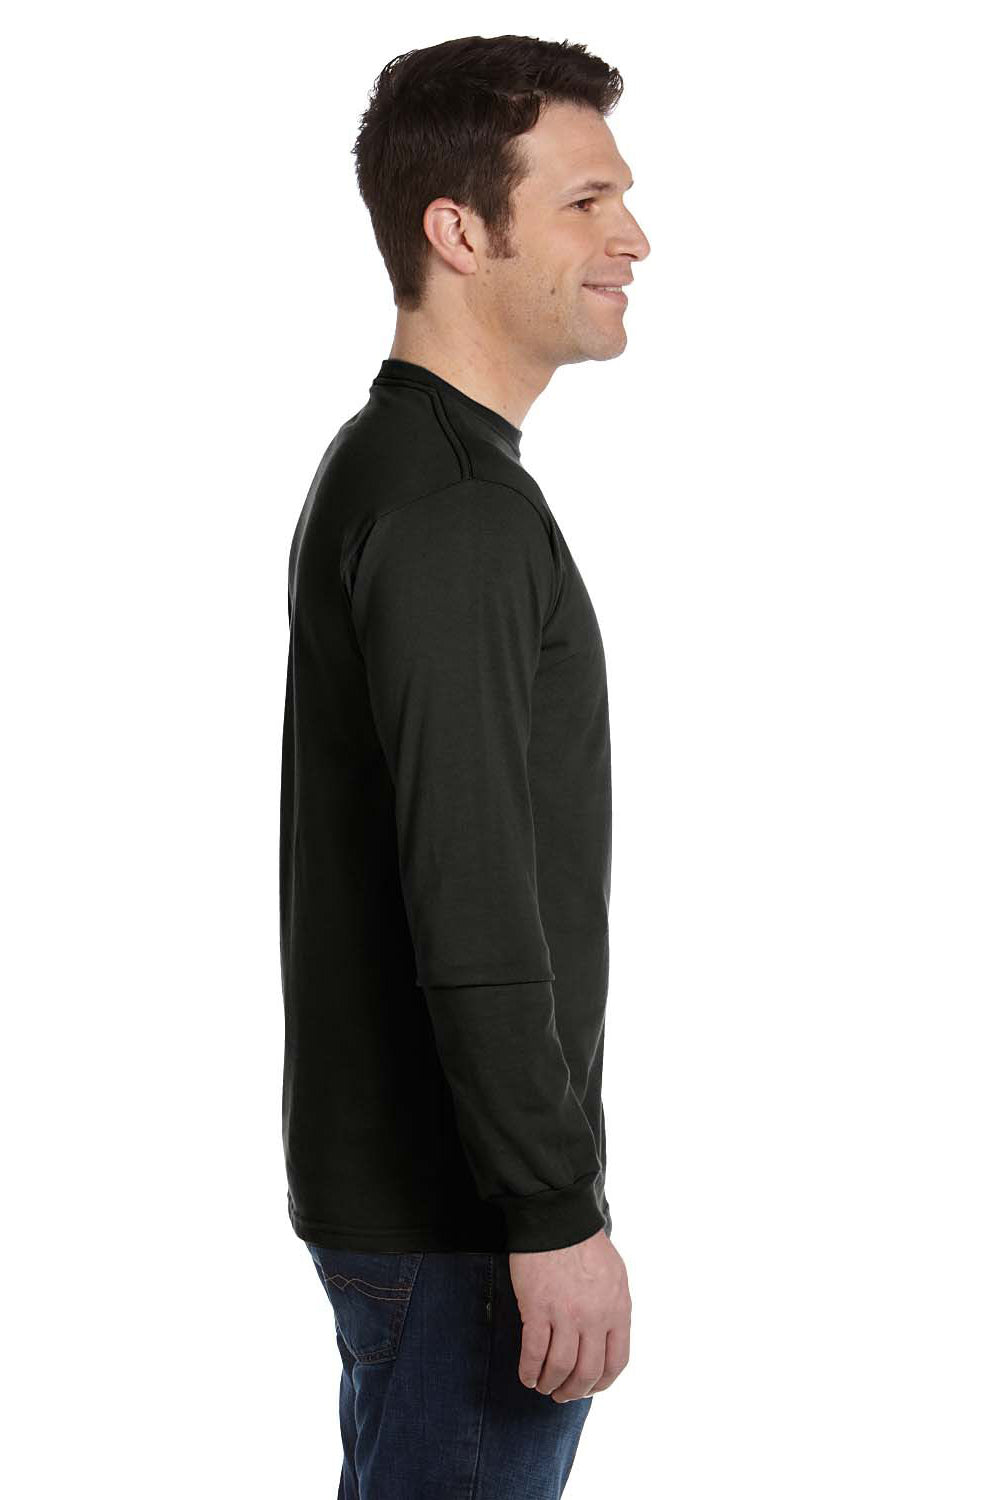 Econscious EC1500 Mens Long Sleeve Crewneck T-Shirt Black Side